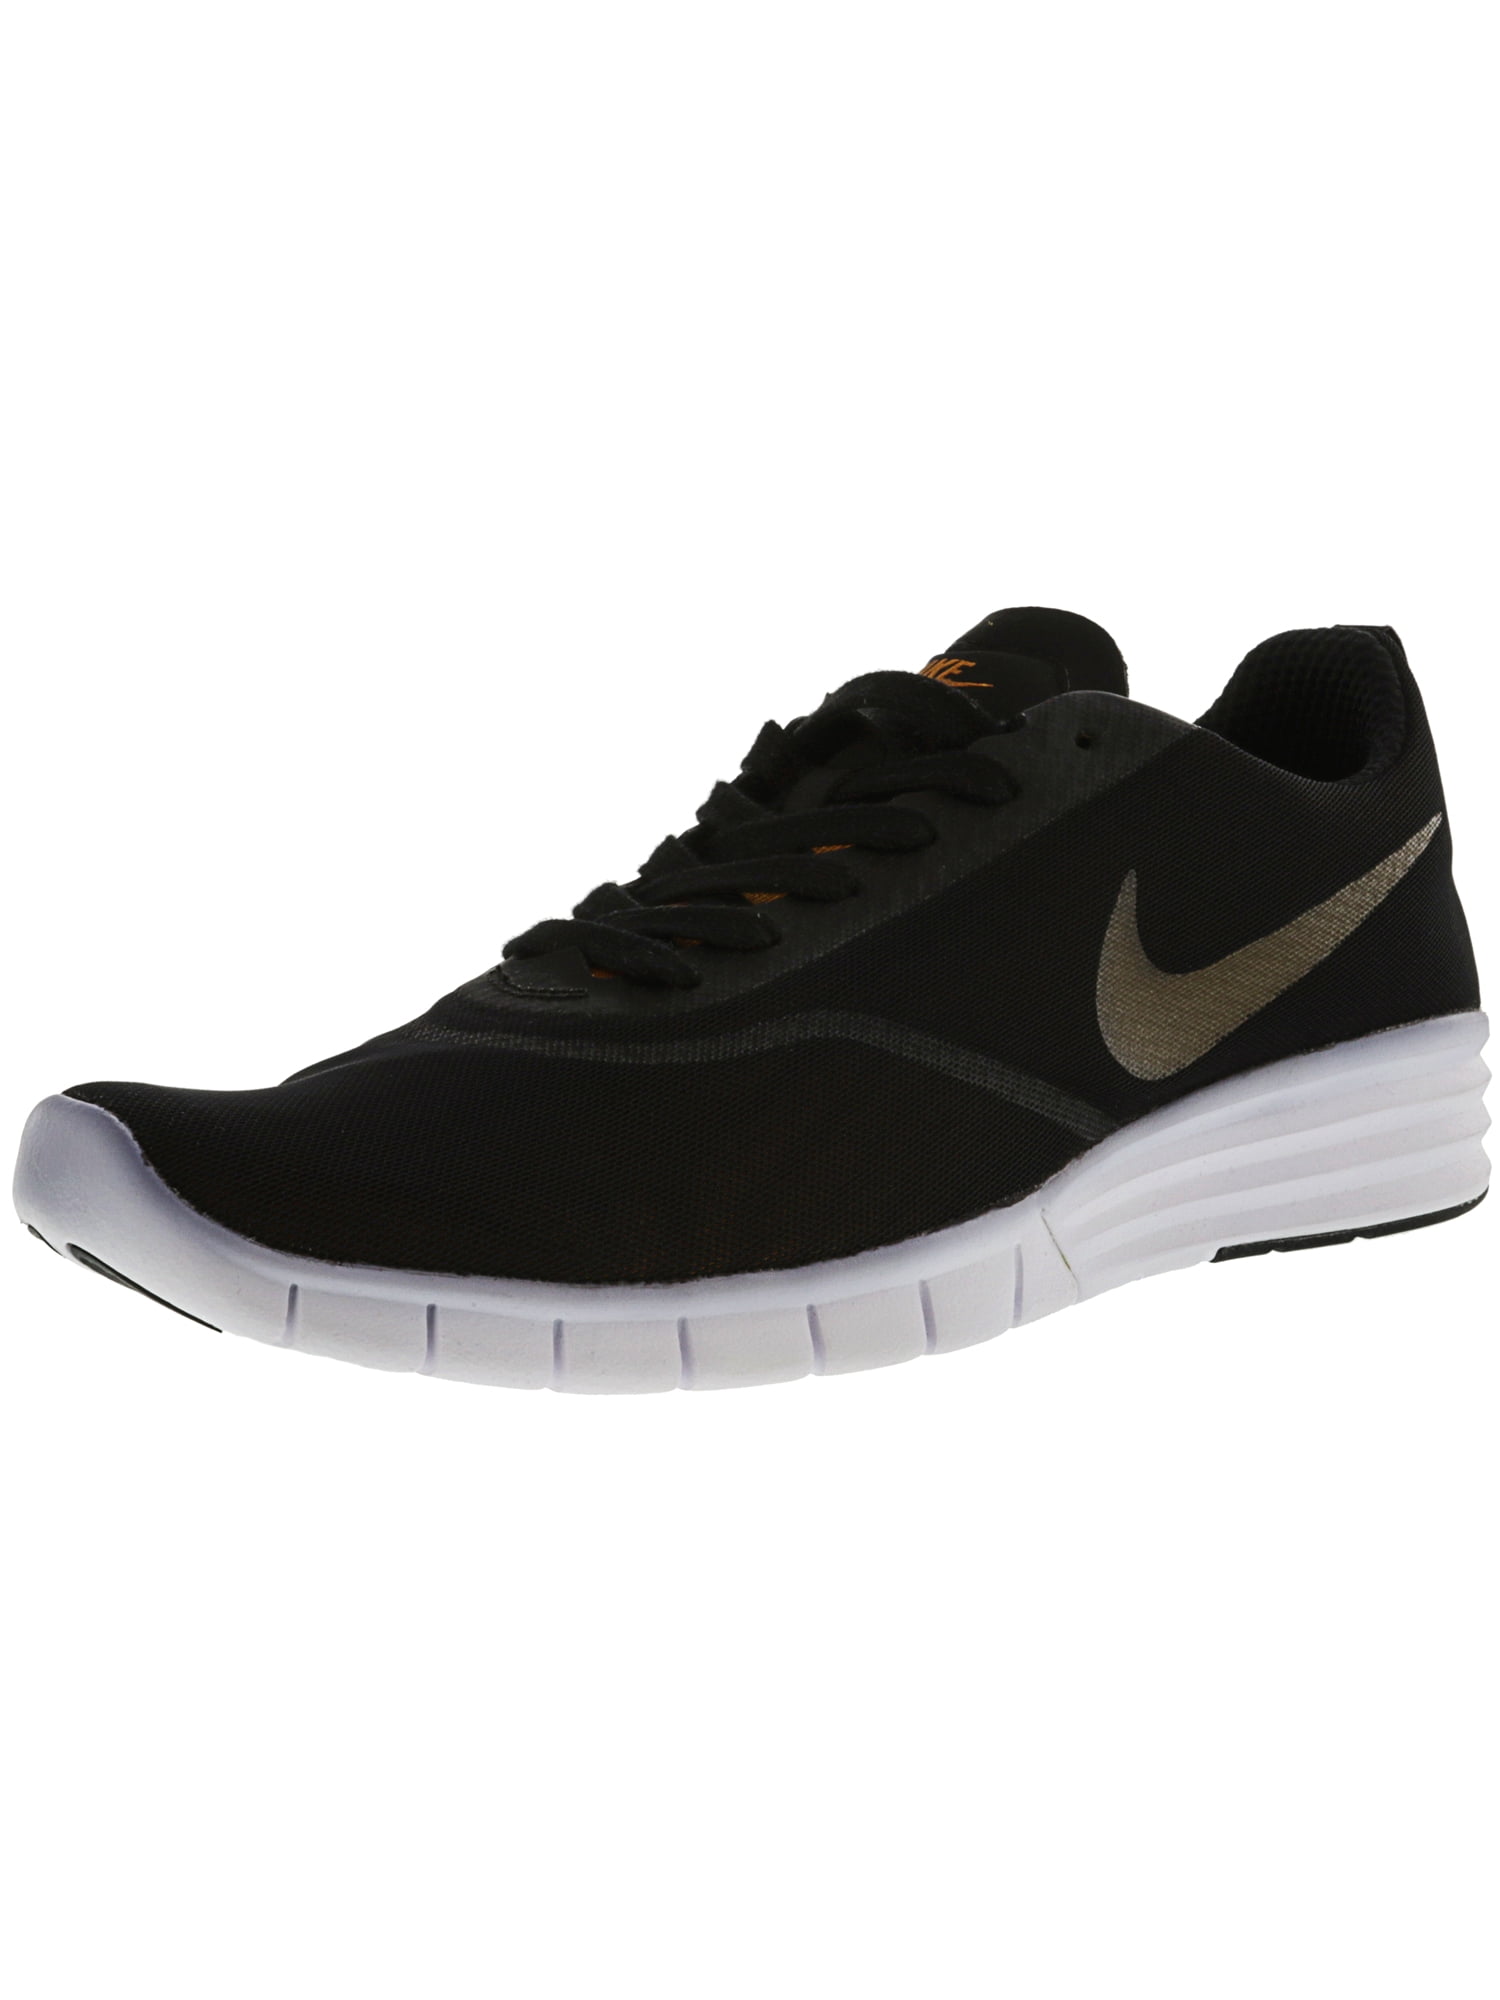 Nike Men's Sb Lunar Paul Rodriguez 9 Black / Sunset - White Ankle-High Shoe 9.5M Walmart.com